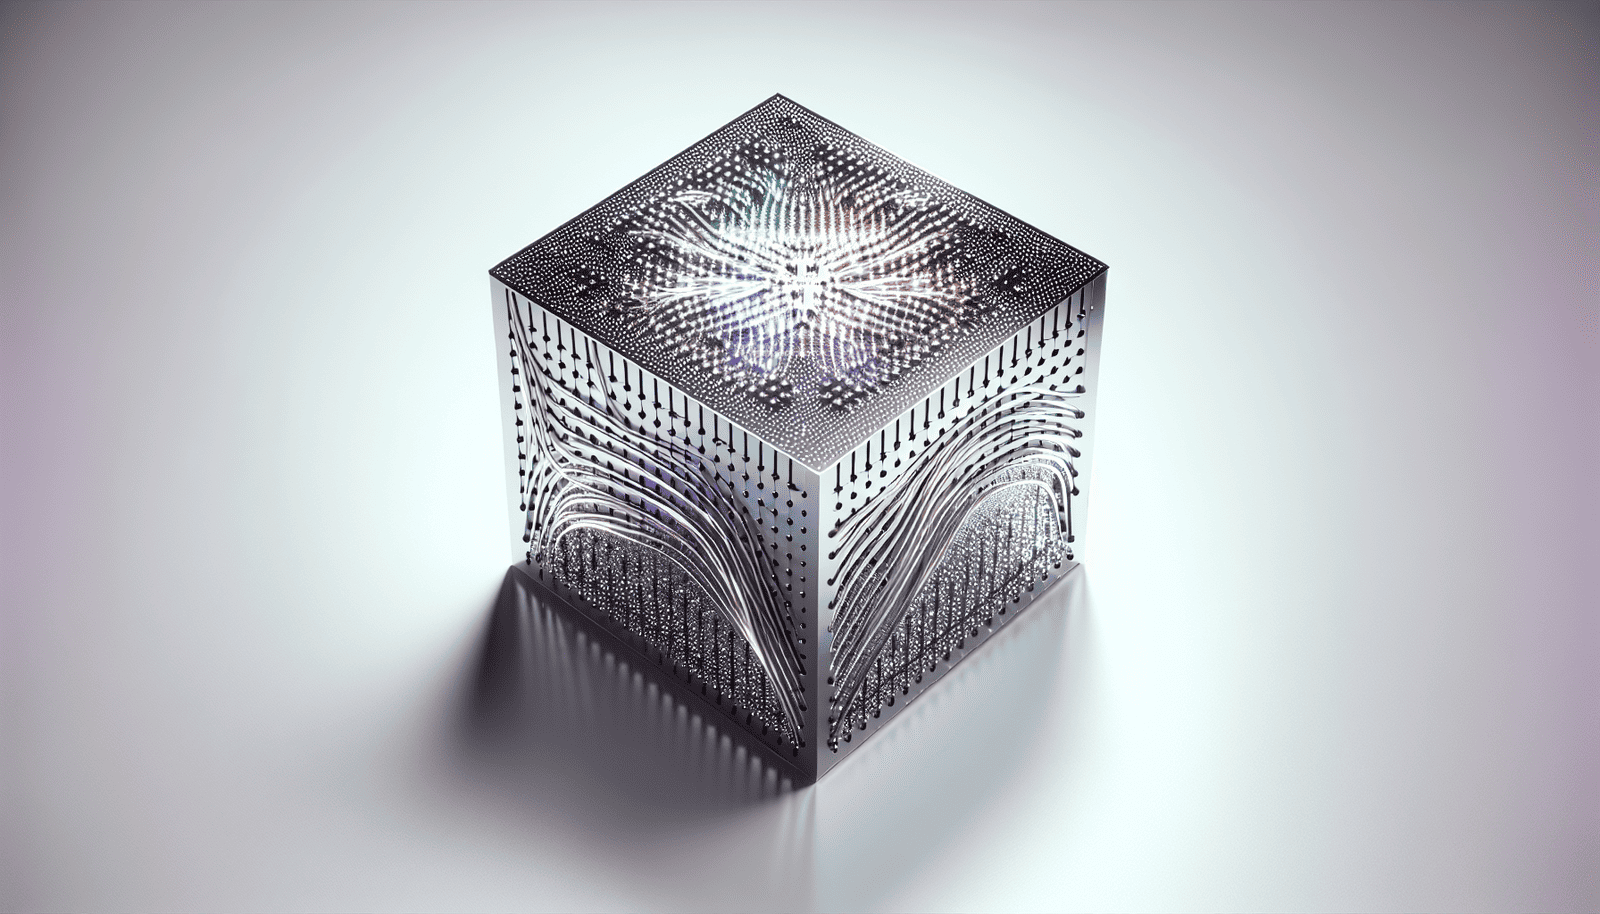 Quantum computer chip with 1,121 qubits